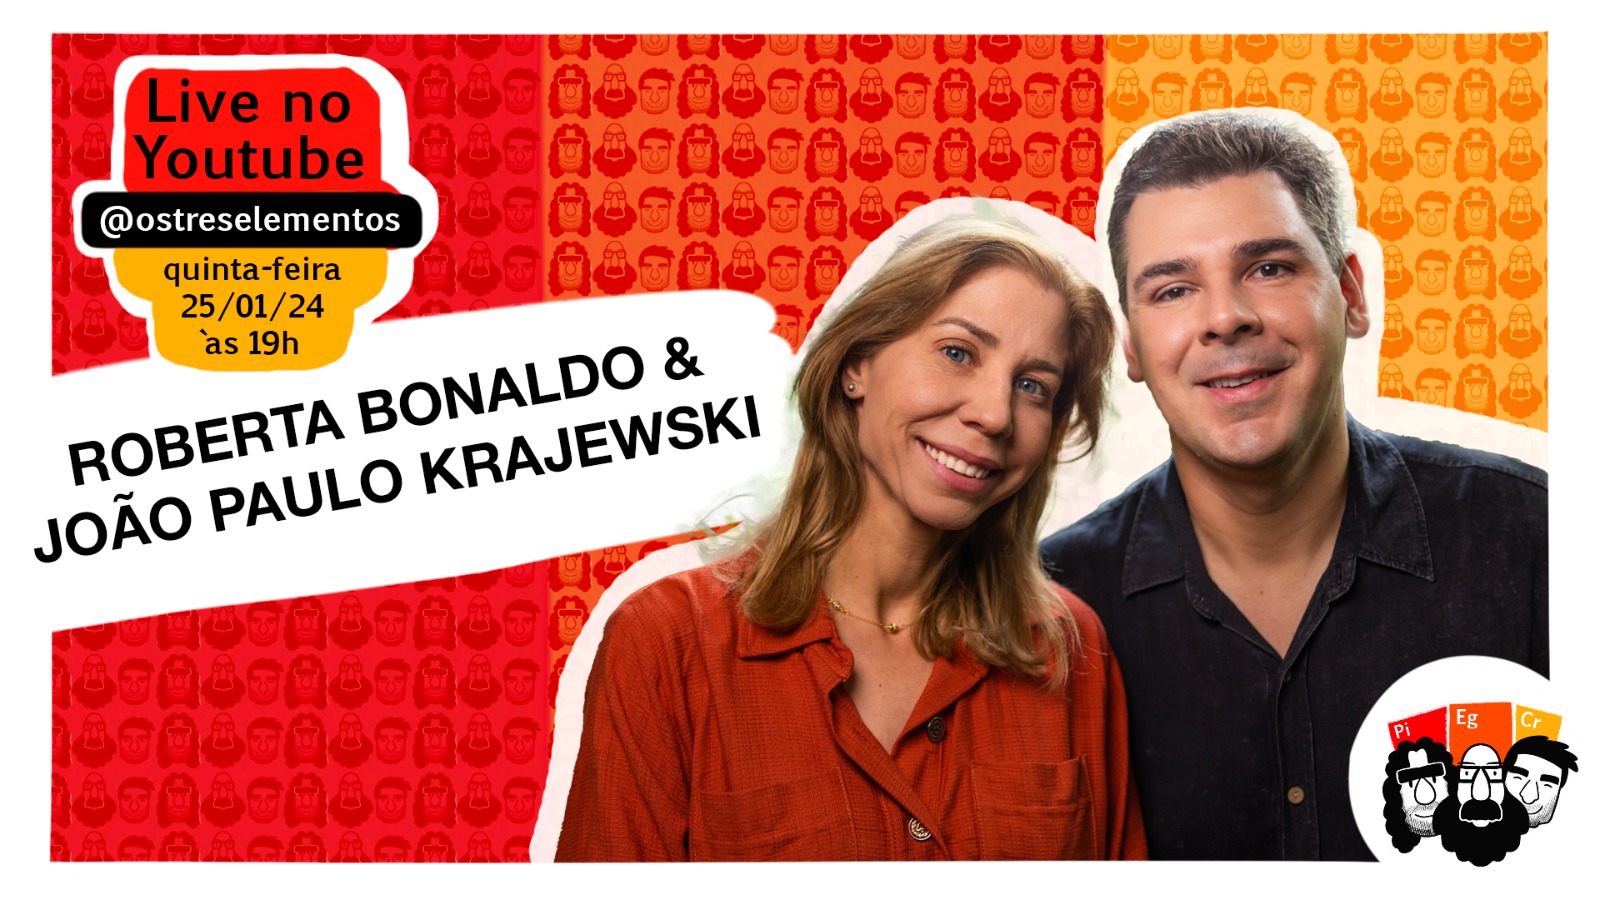 João Paulo Krajewski and Roberta Bonaldo at Os Três Elementos Podcast